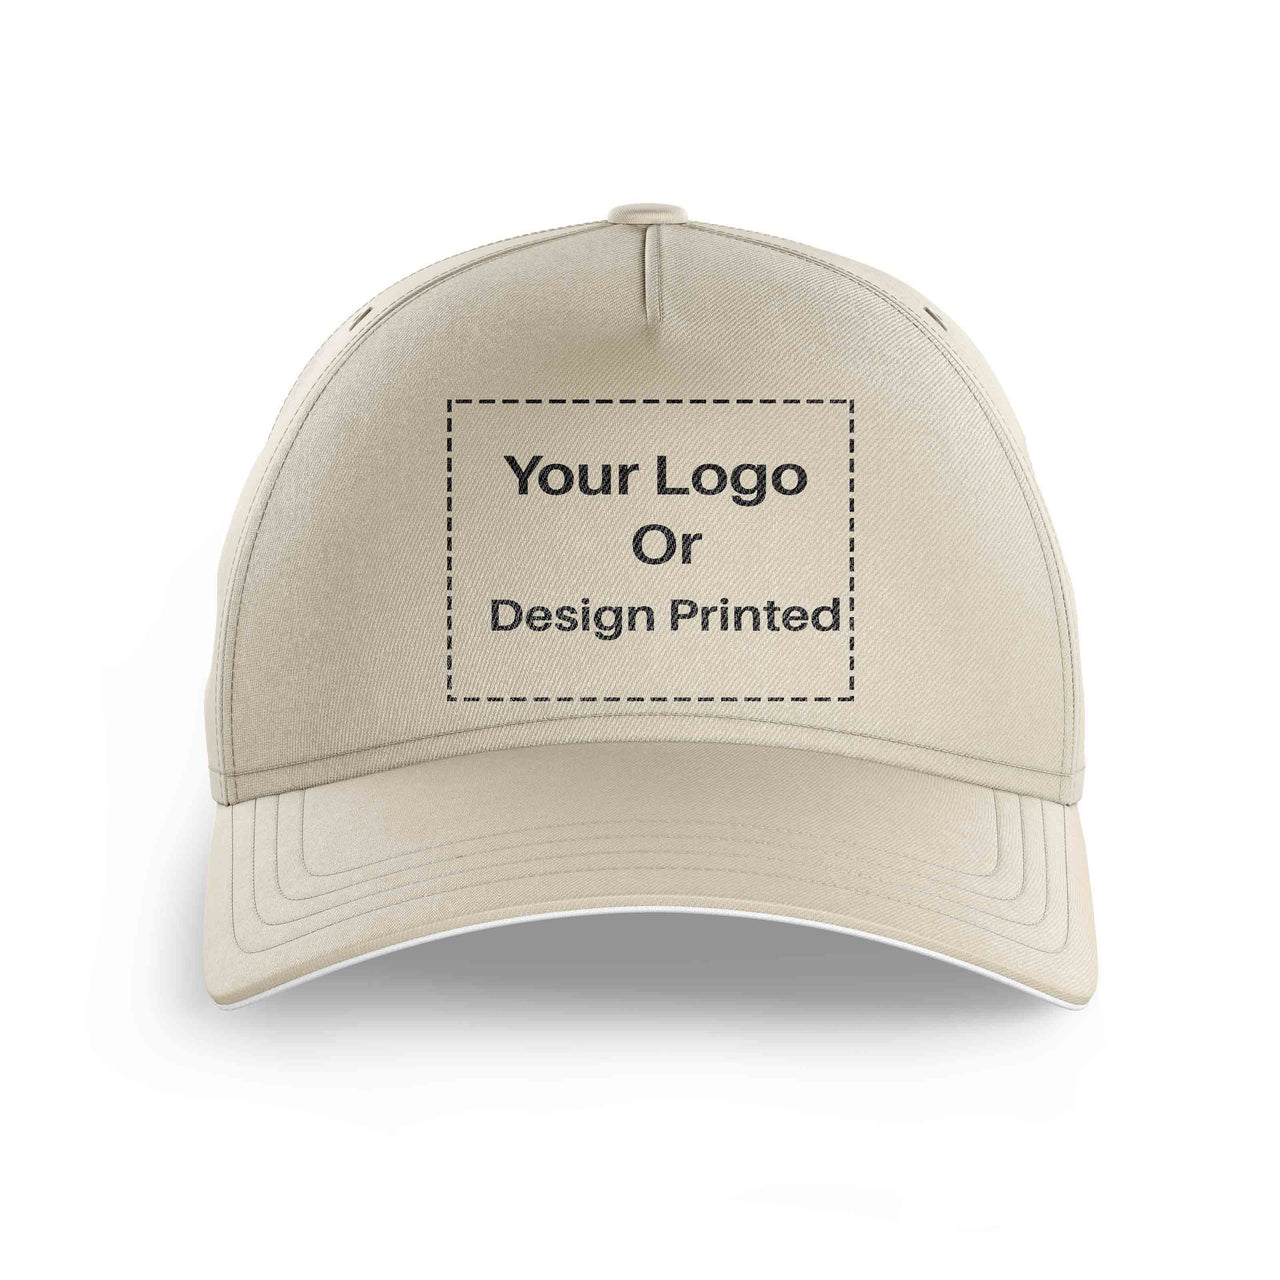 Your Custom Image & LOGO Printed Hats